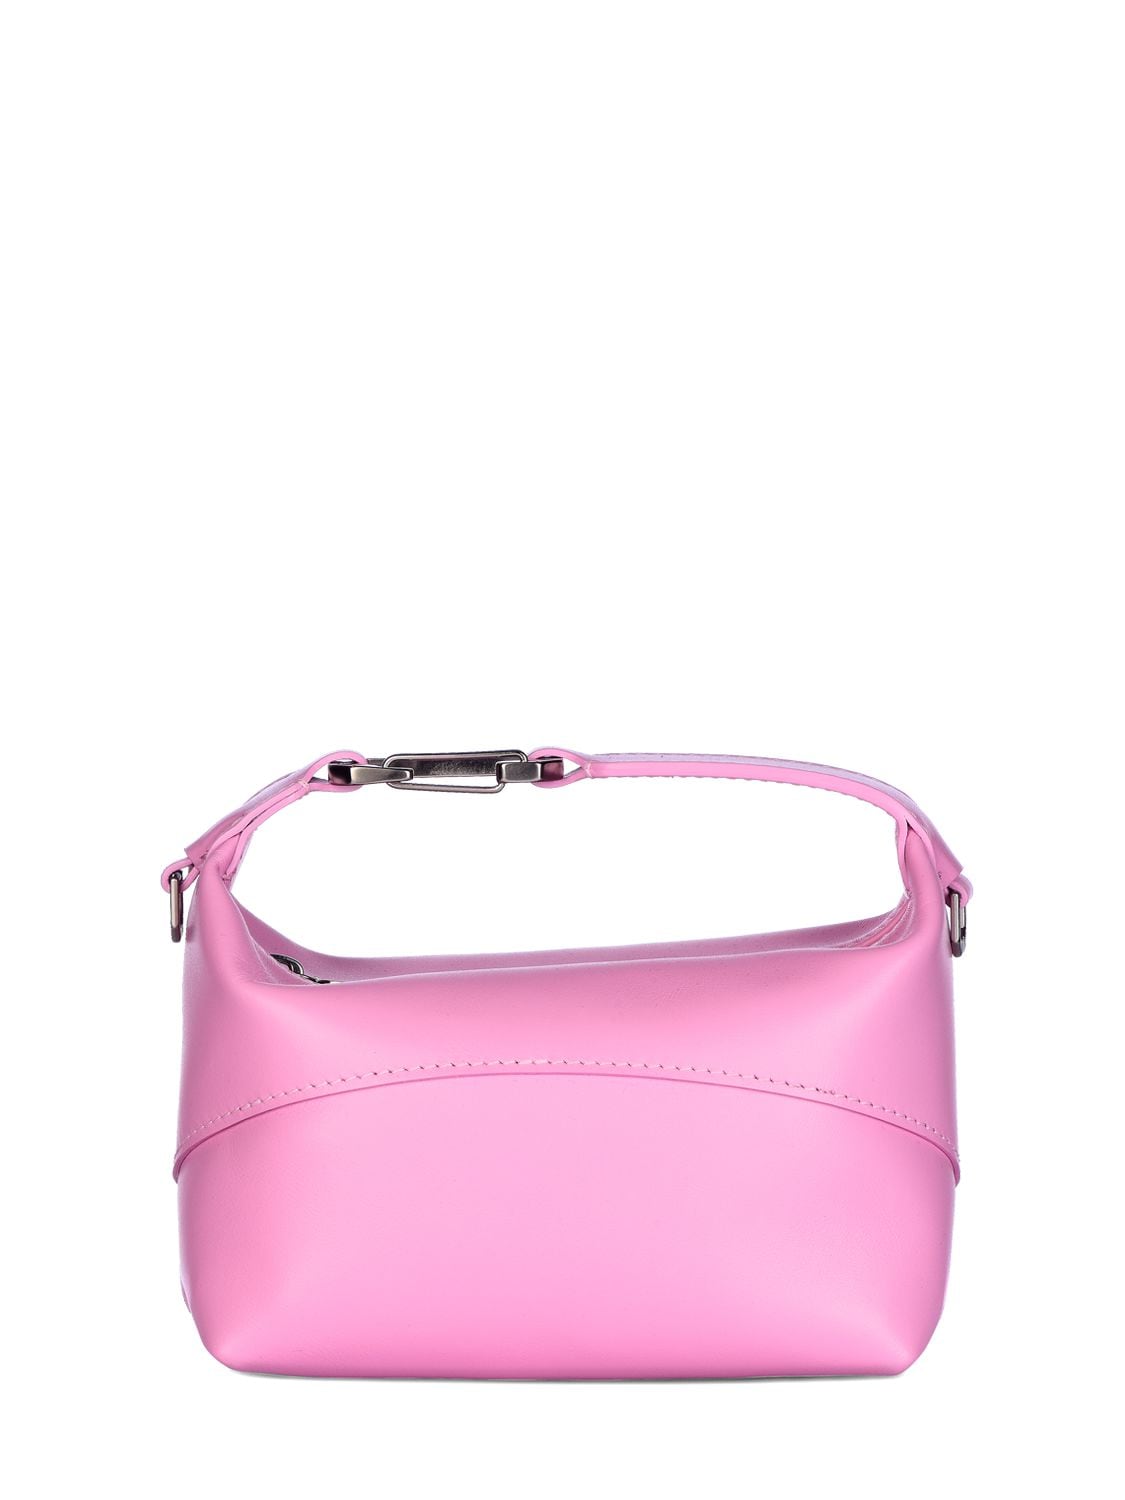 Eéra Moon Leather Top Handle Bag In Baby Pink